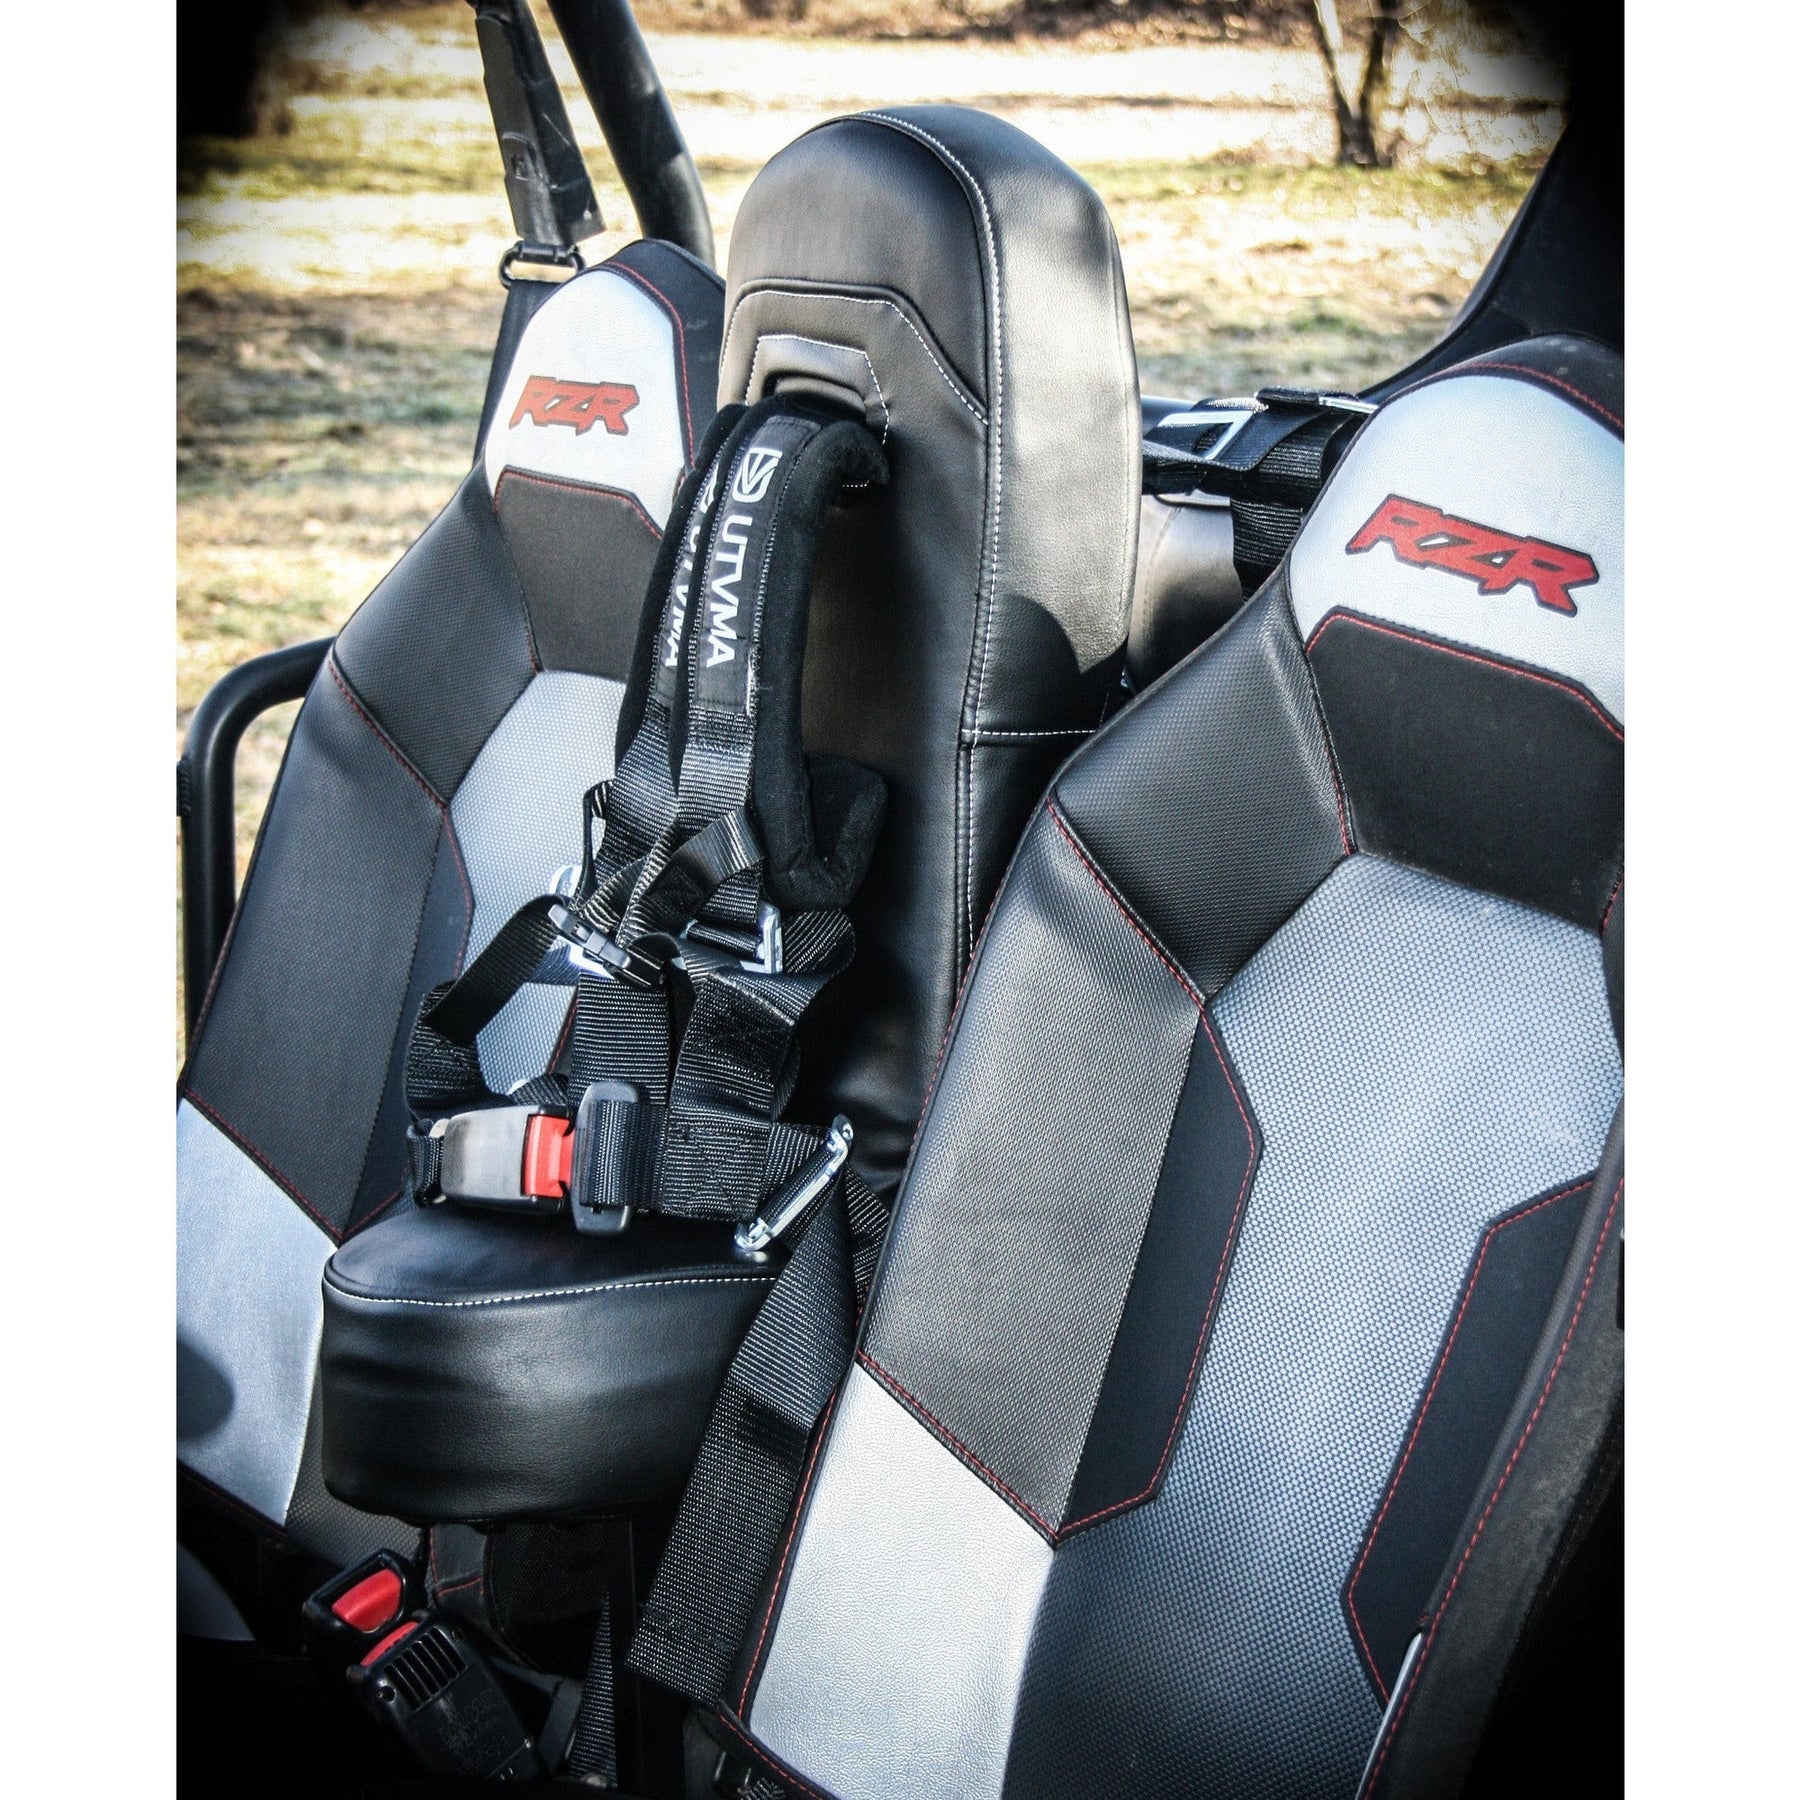 Safety booster seat for Can-Am Polaris Yamaha RZR X3 YXZ Honda Talon